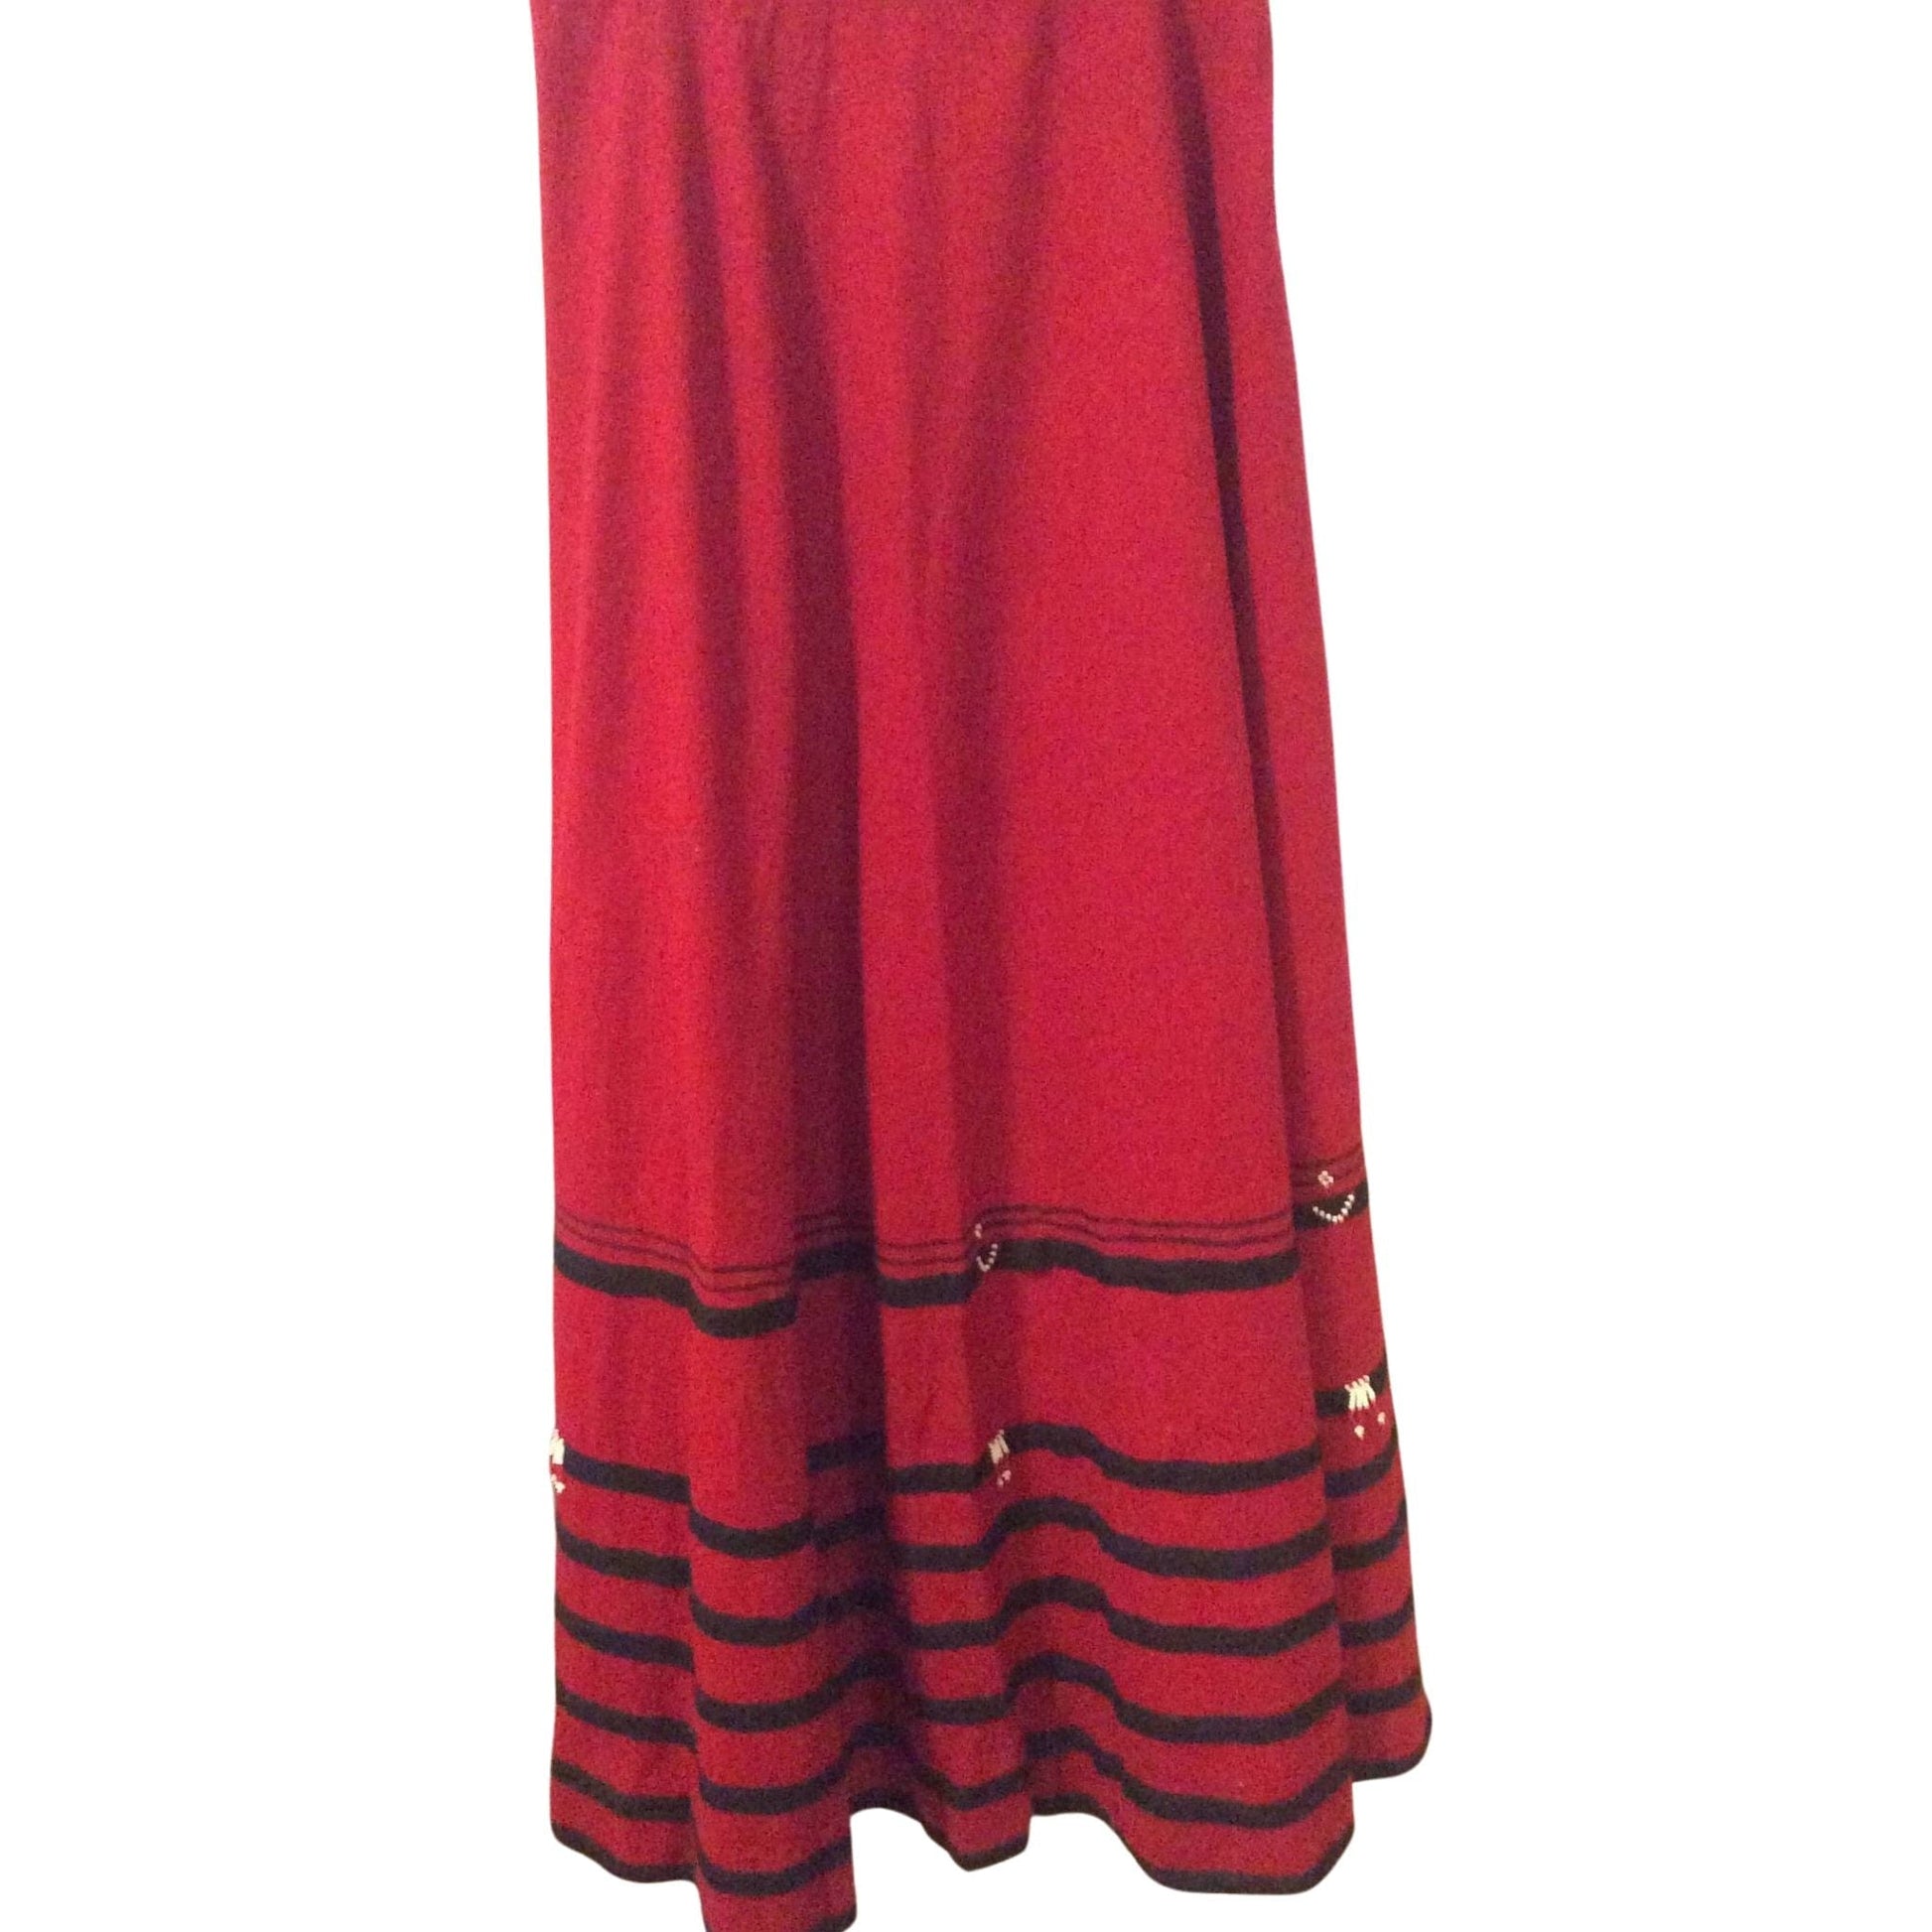 Vintage Raw Linen Skirt Medium / Red / Vintage 1930s